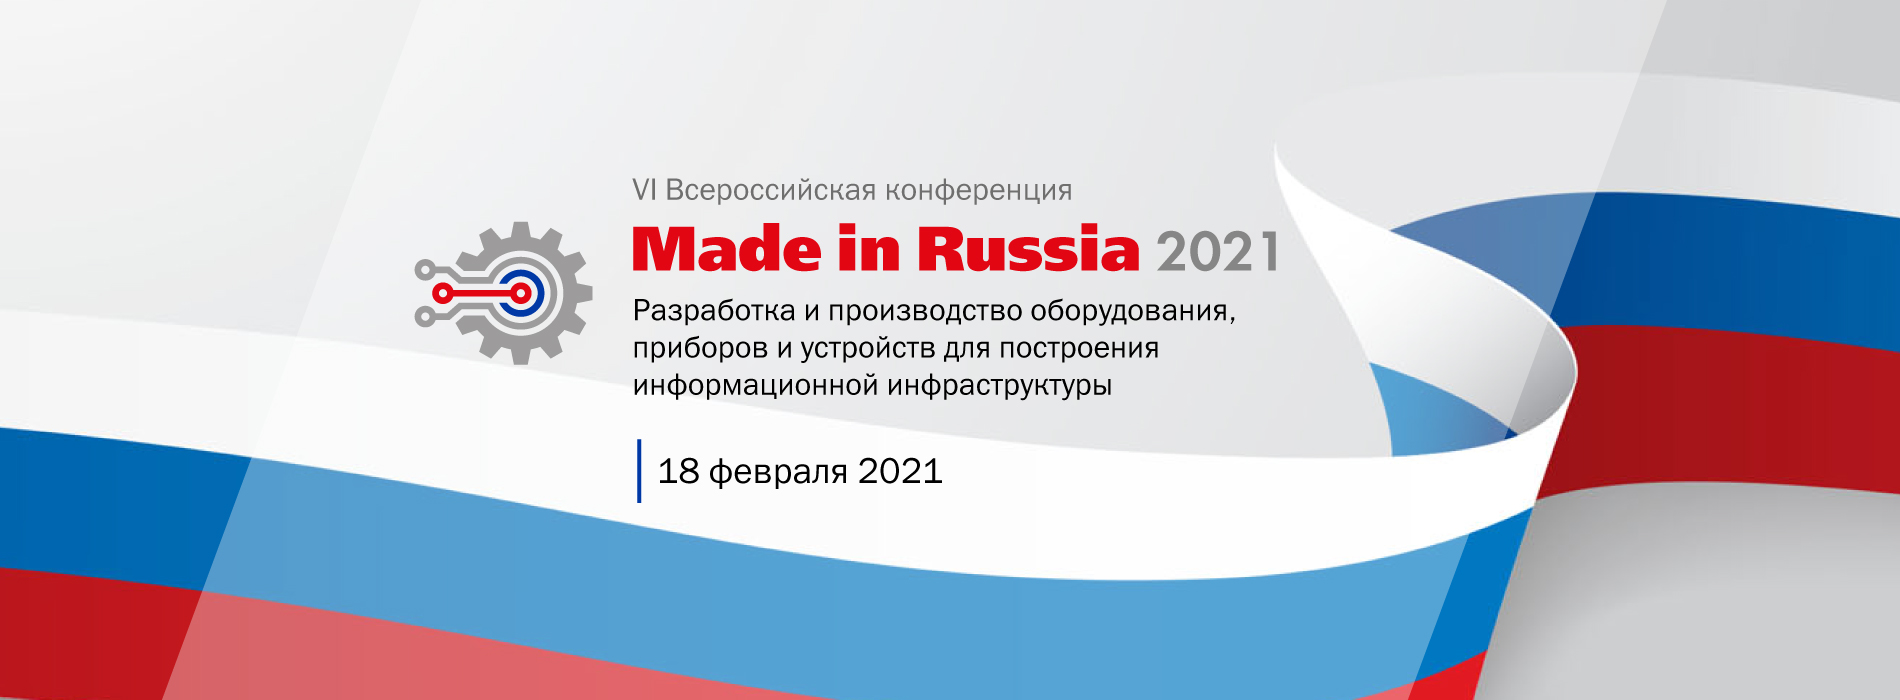 In russia в россии. Russia 2021. Made in Russia. ЭХП made in Russia. Made in Russia выставка.